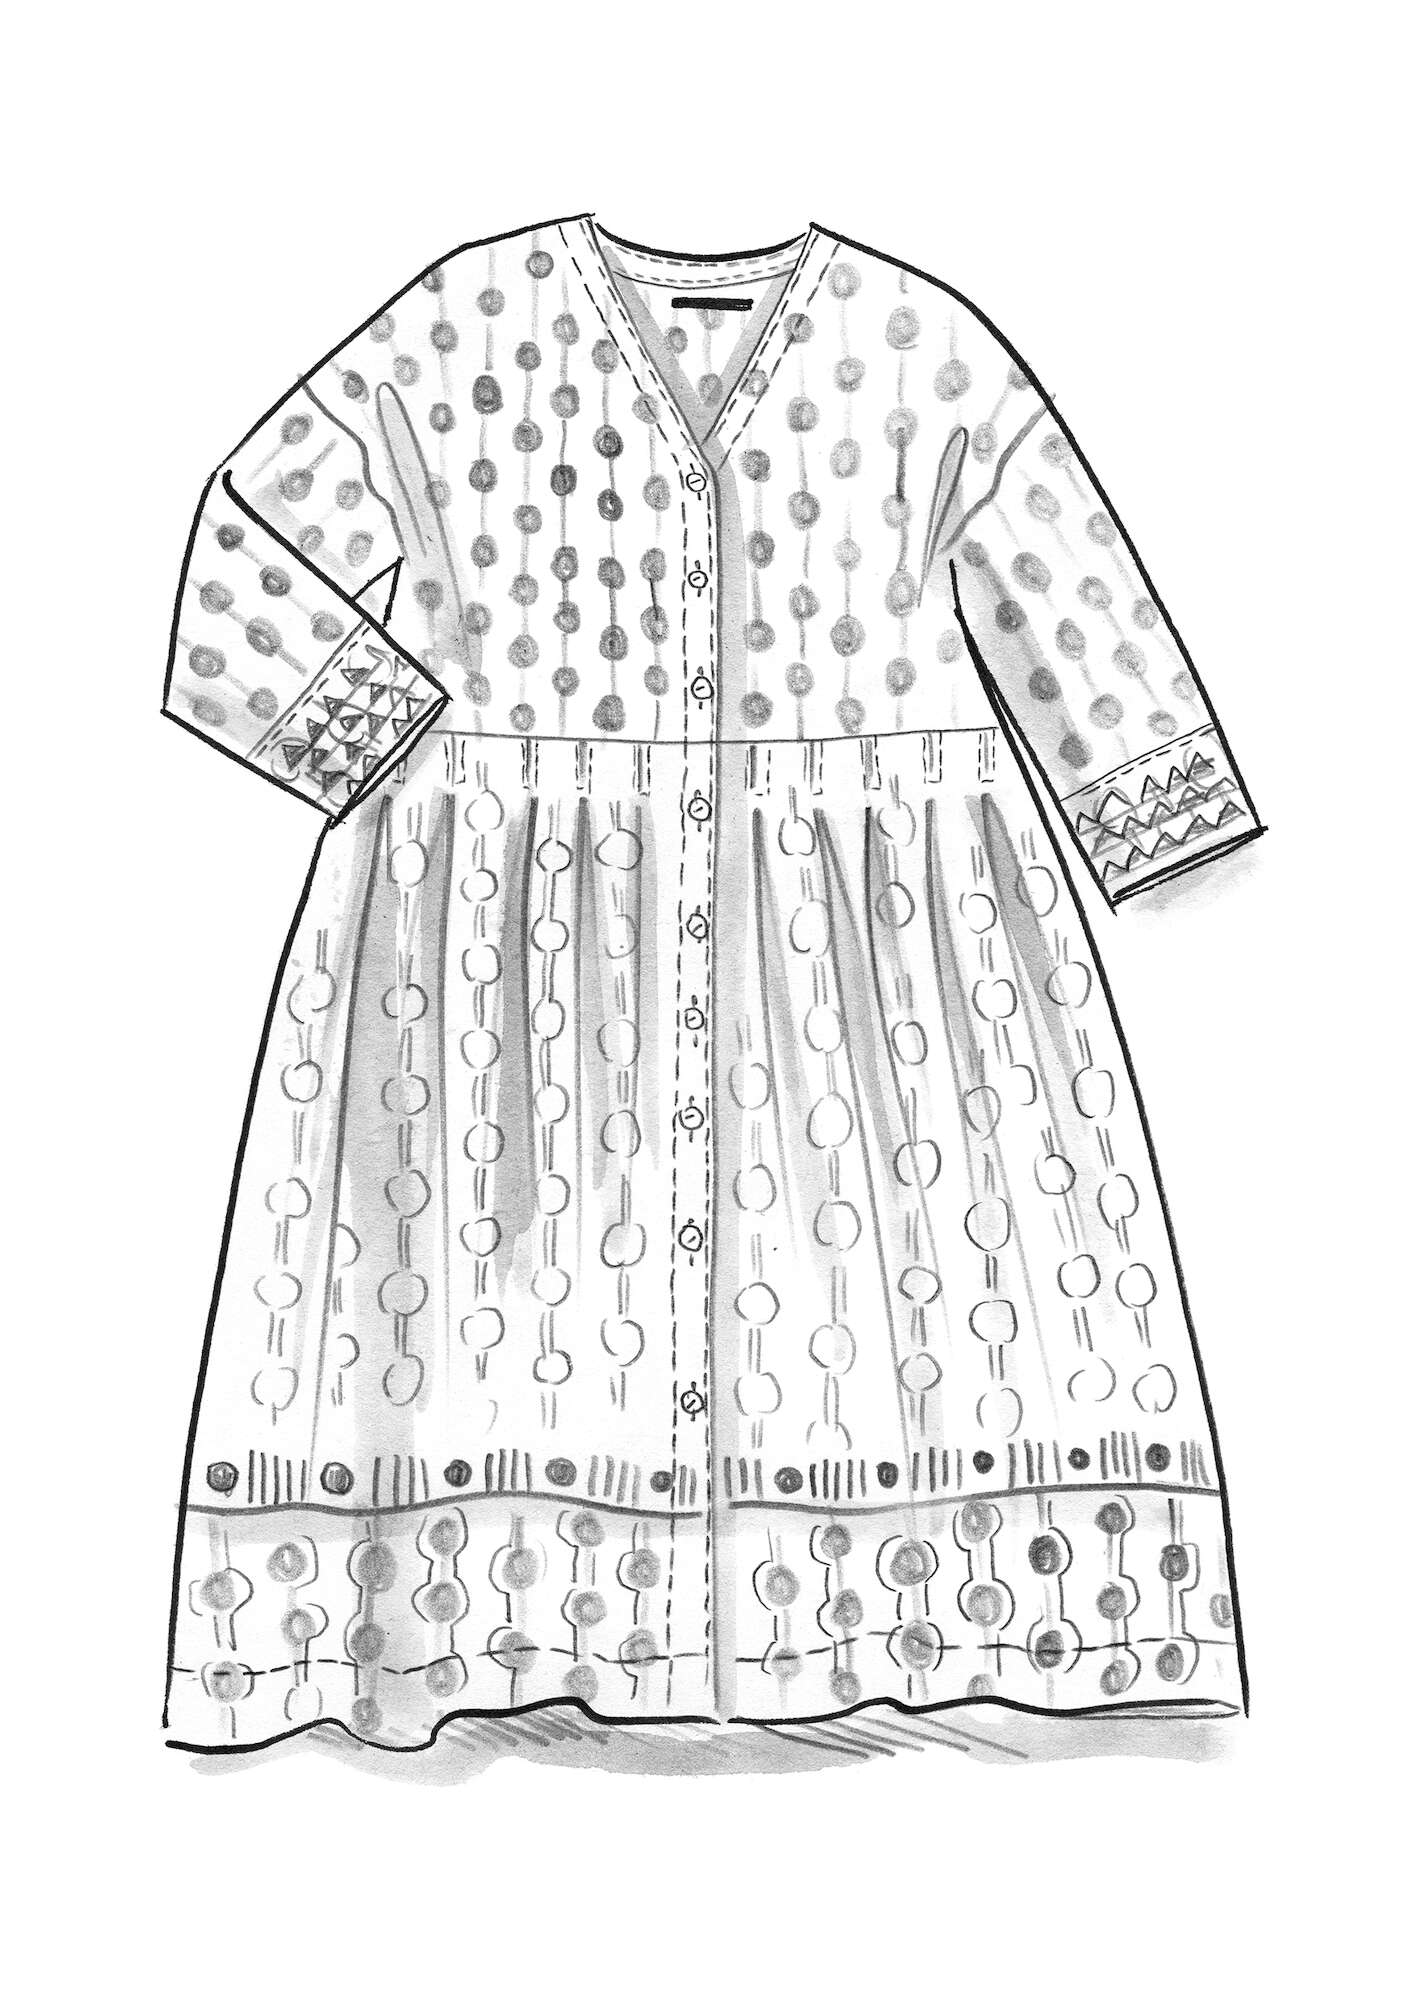 Vævet kjole  Zazu  i økologisk bomuld påfuglegrøn